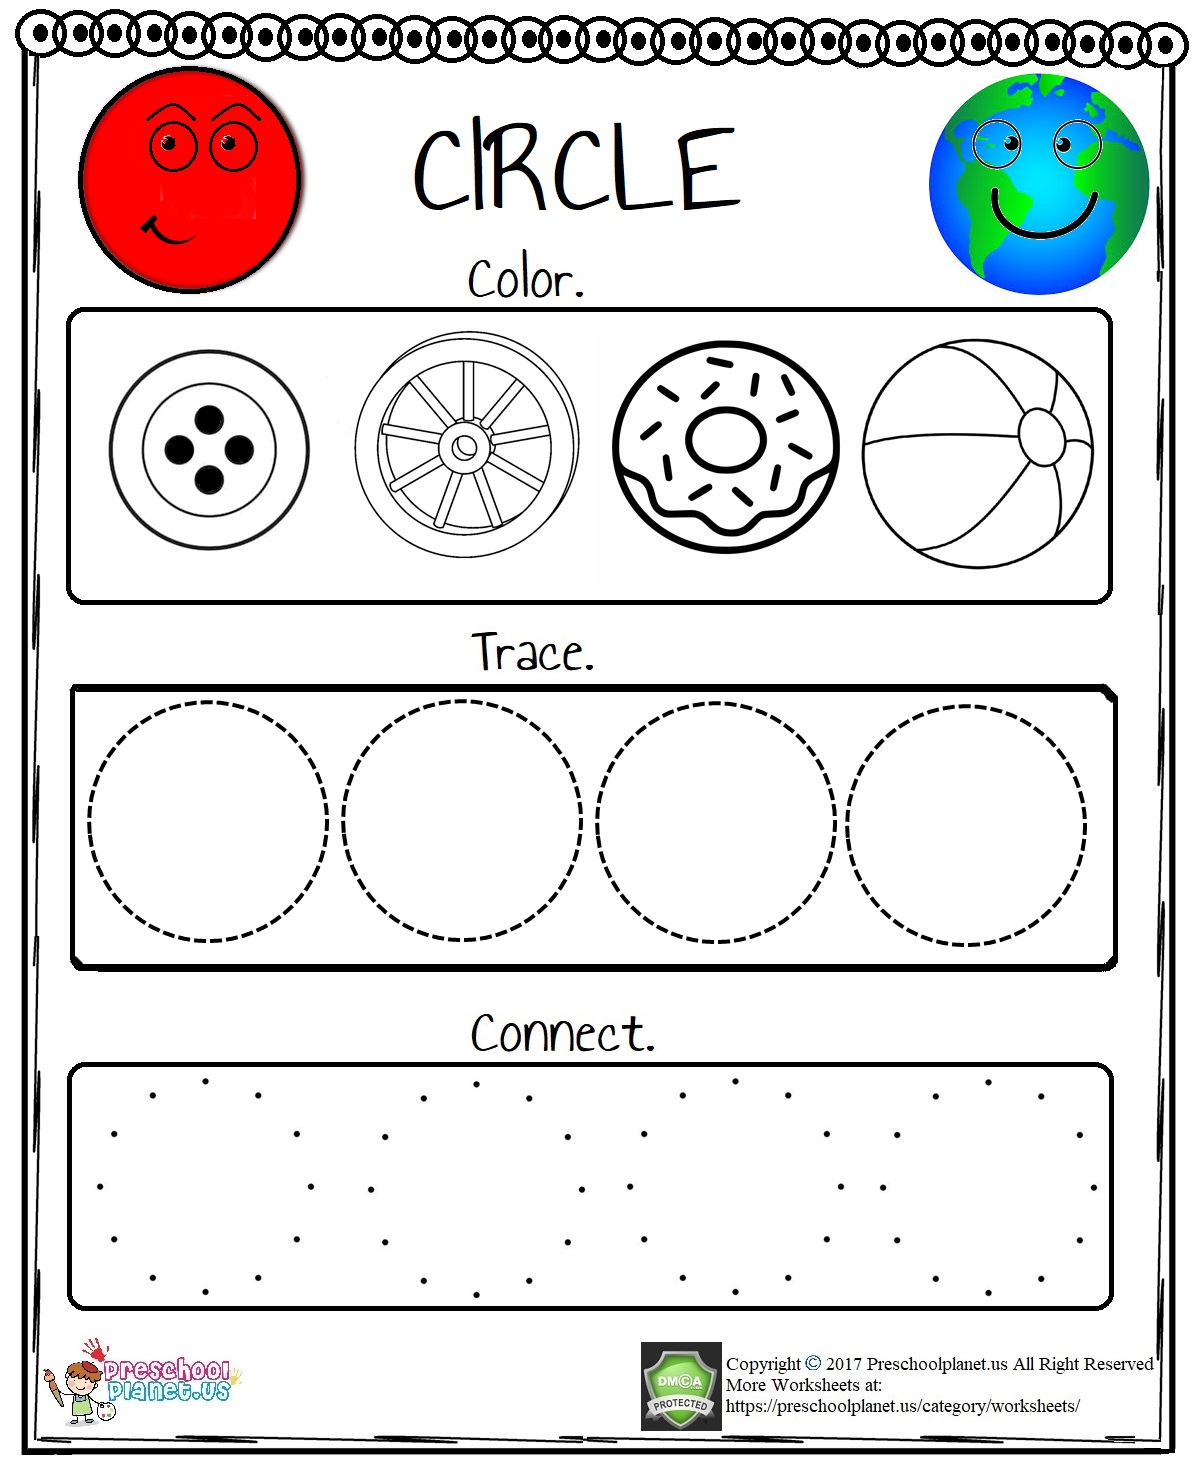 Circle Worksheet for preschool - Preschoolplanet